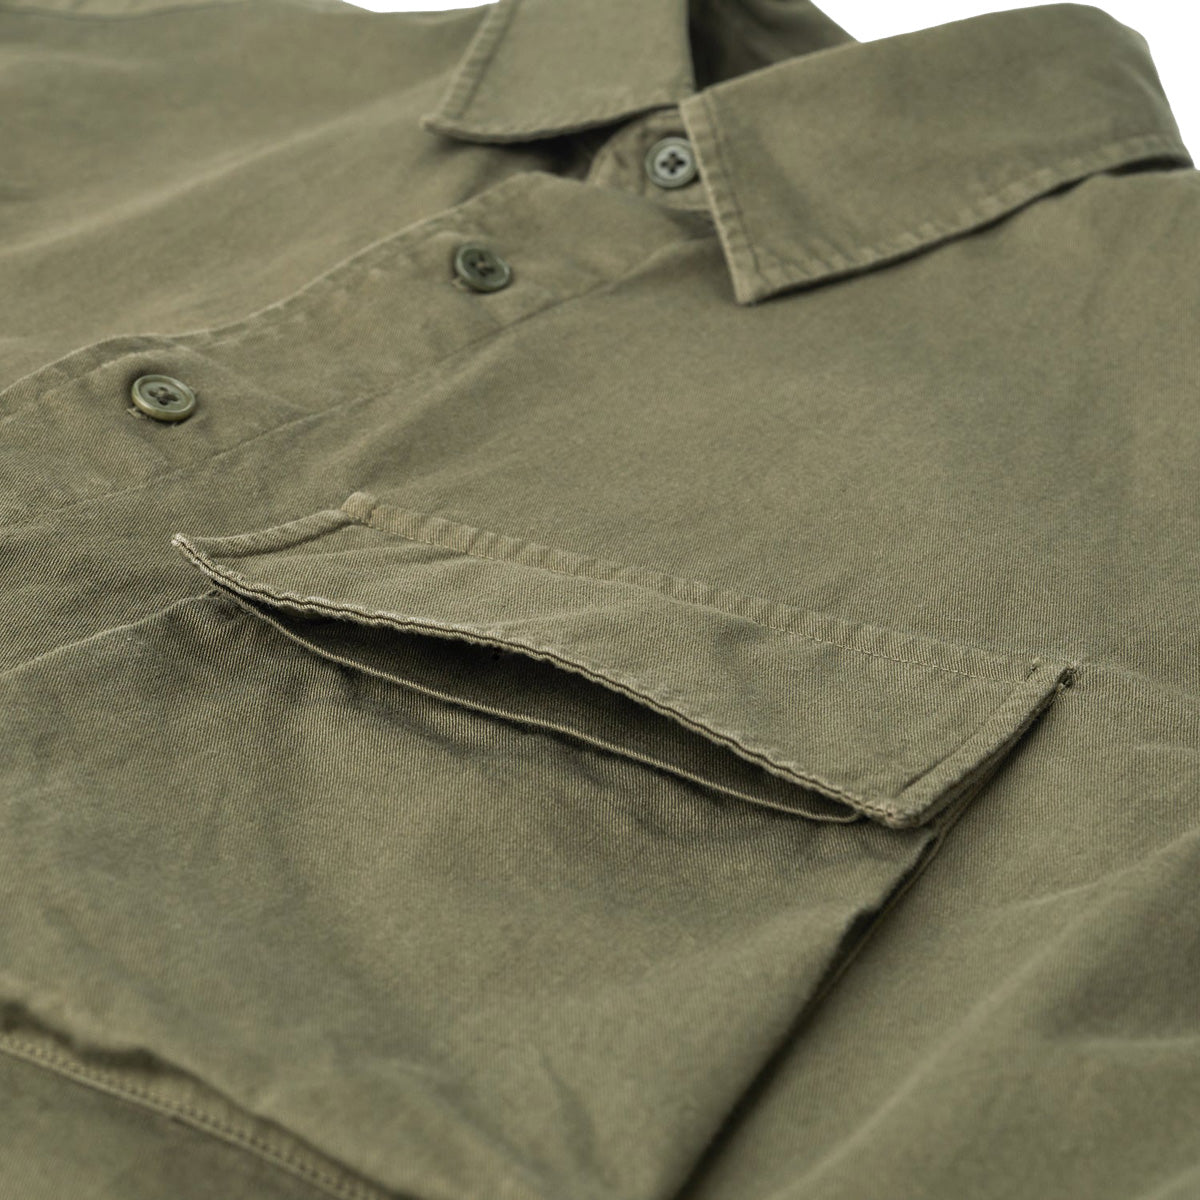 True Olive Garment Dyed Cotton Scale Shirt  Belstaff   